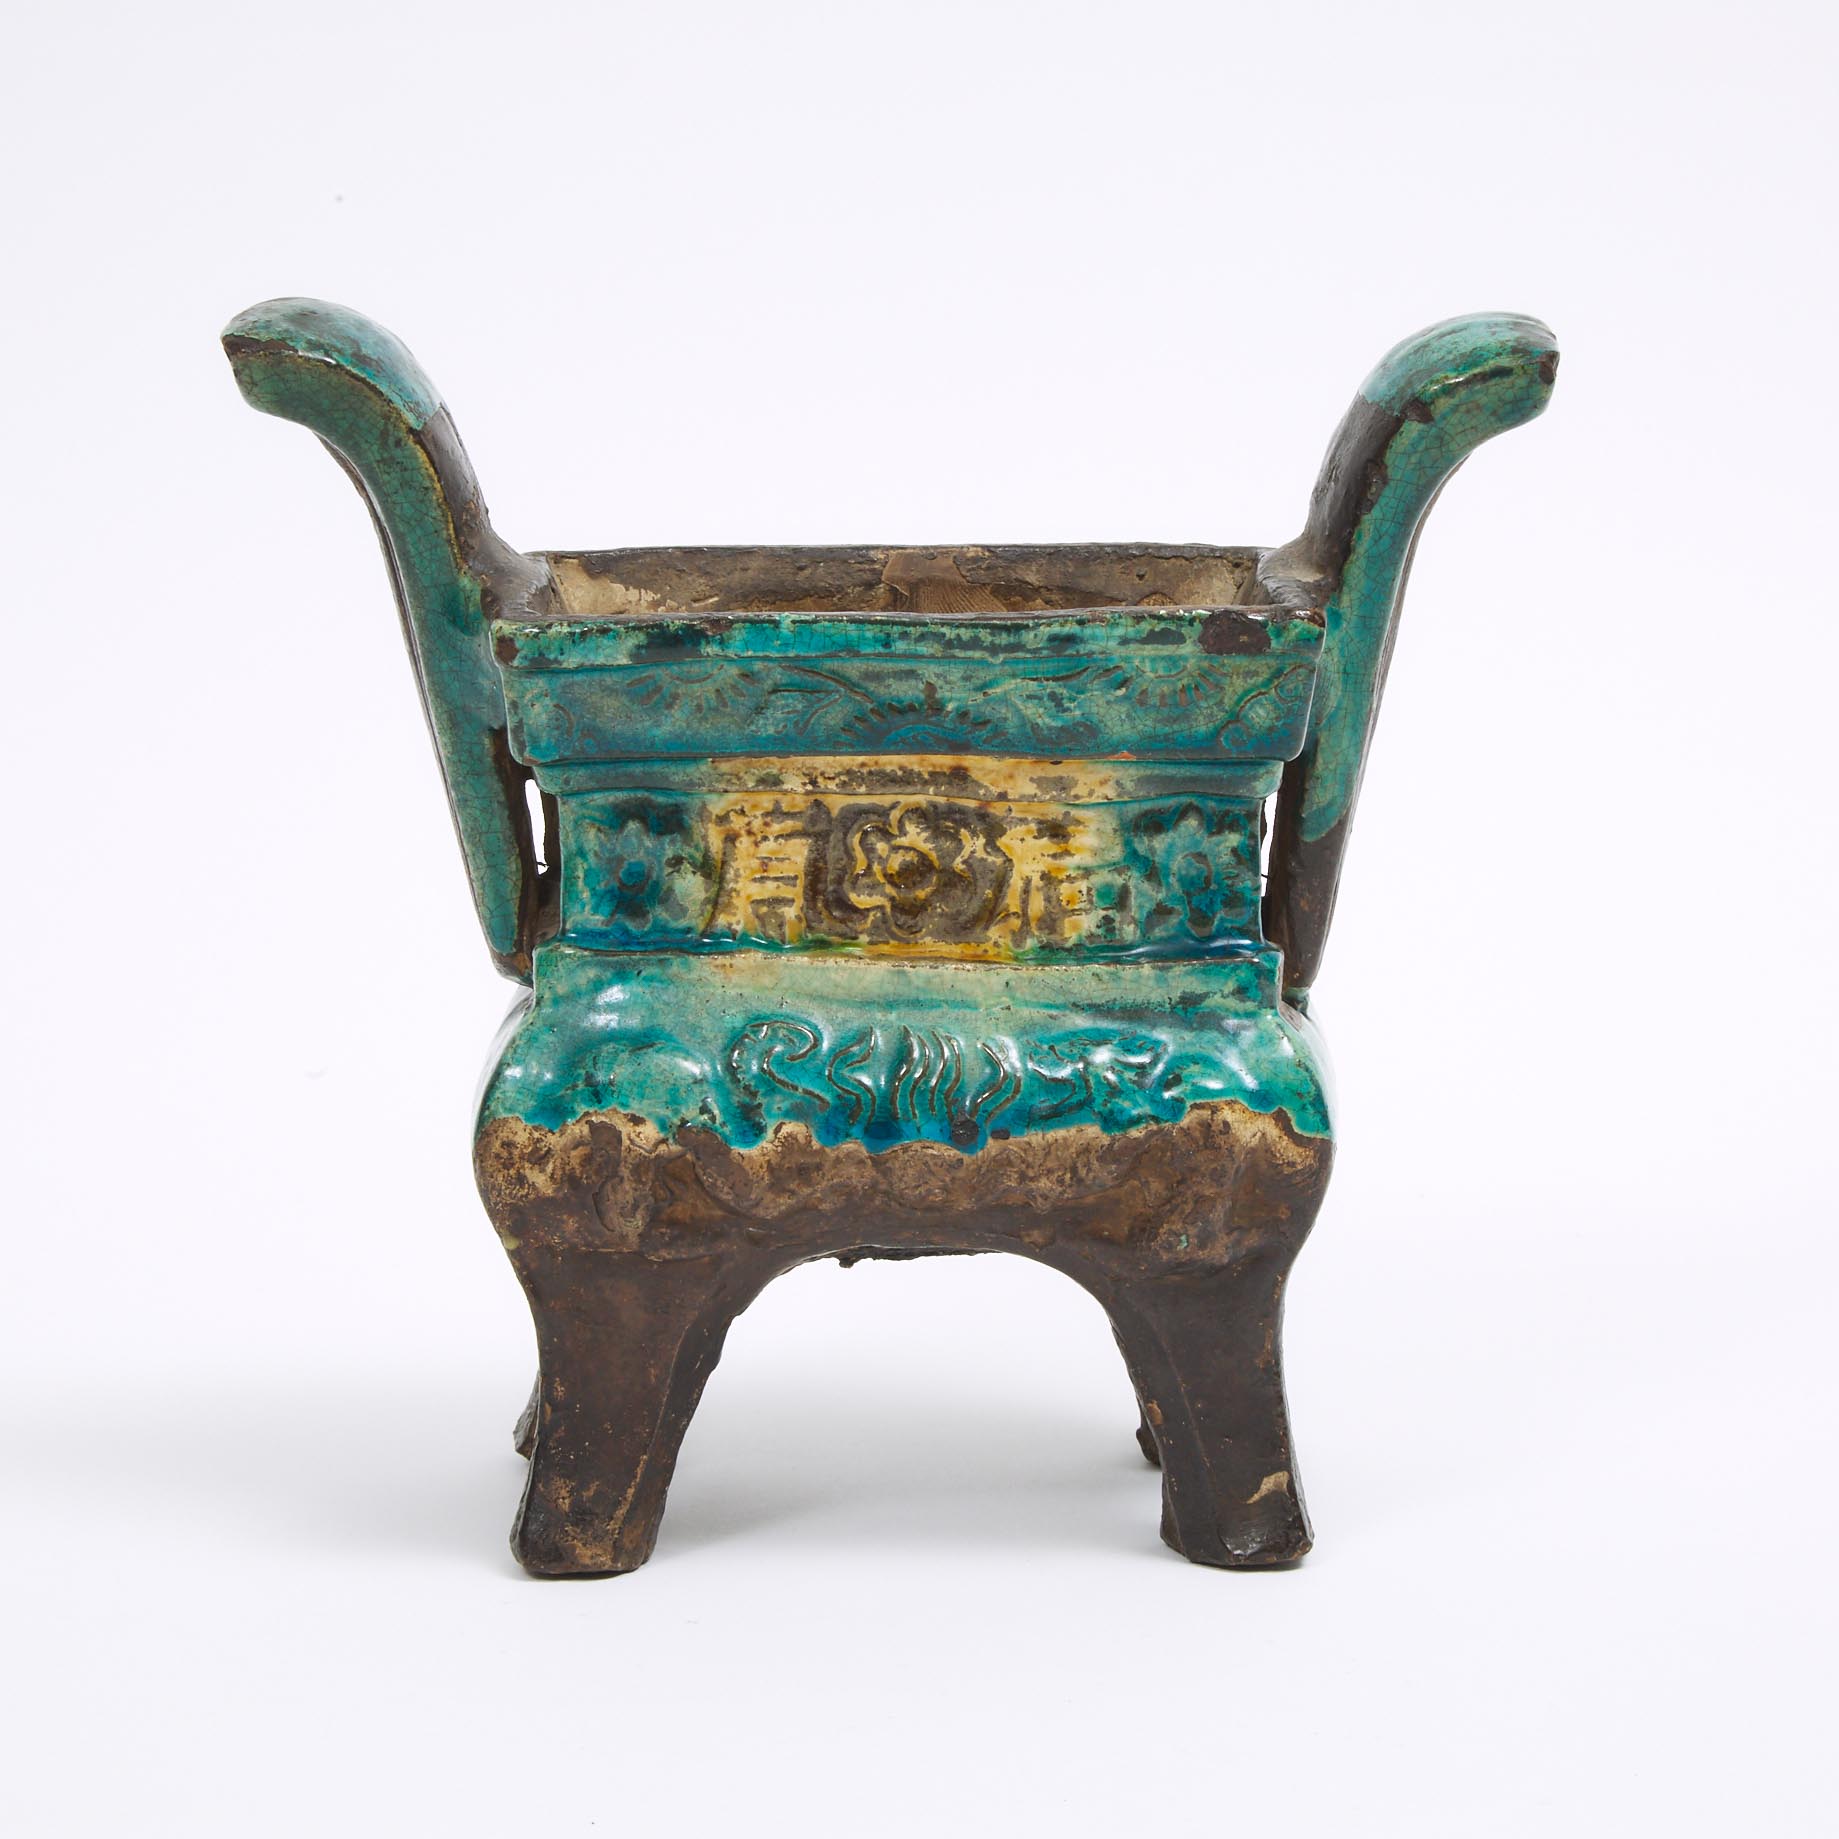 A Fahua-Glazed Pottery Censer, Ming Dynasty, 16th/17th Century